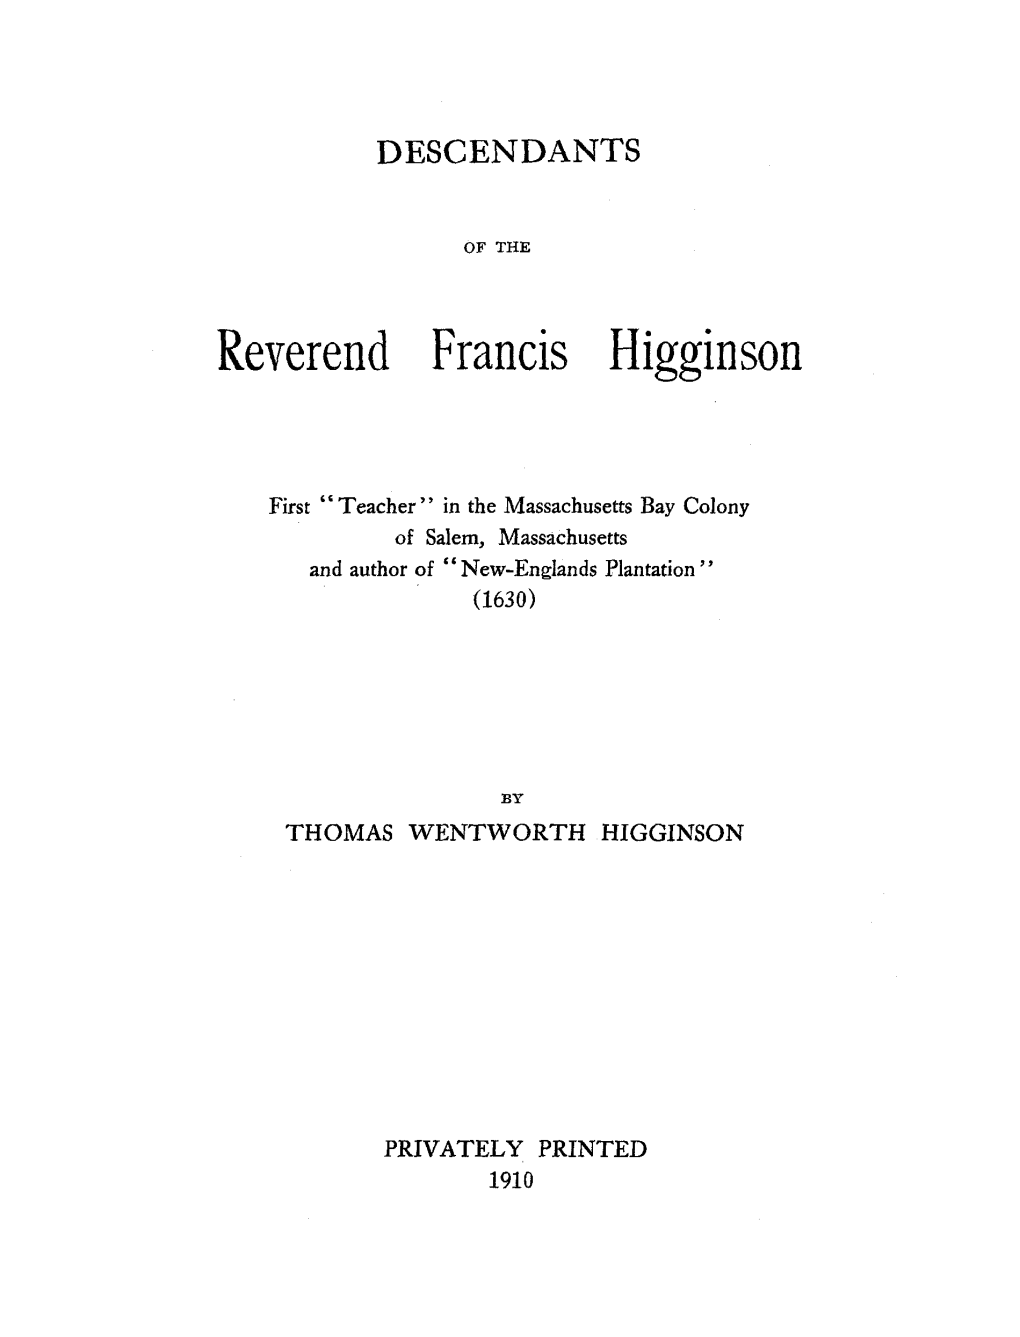 Reverend Francis Higginson